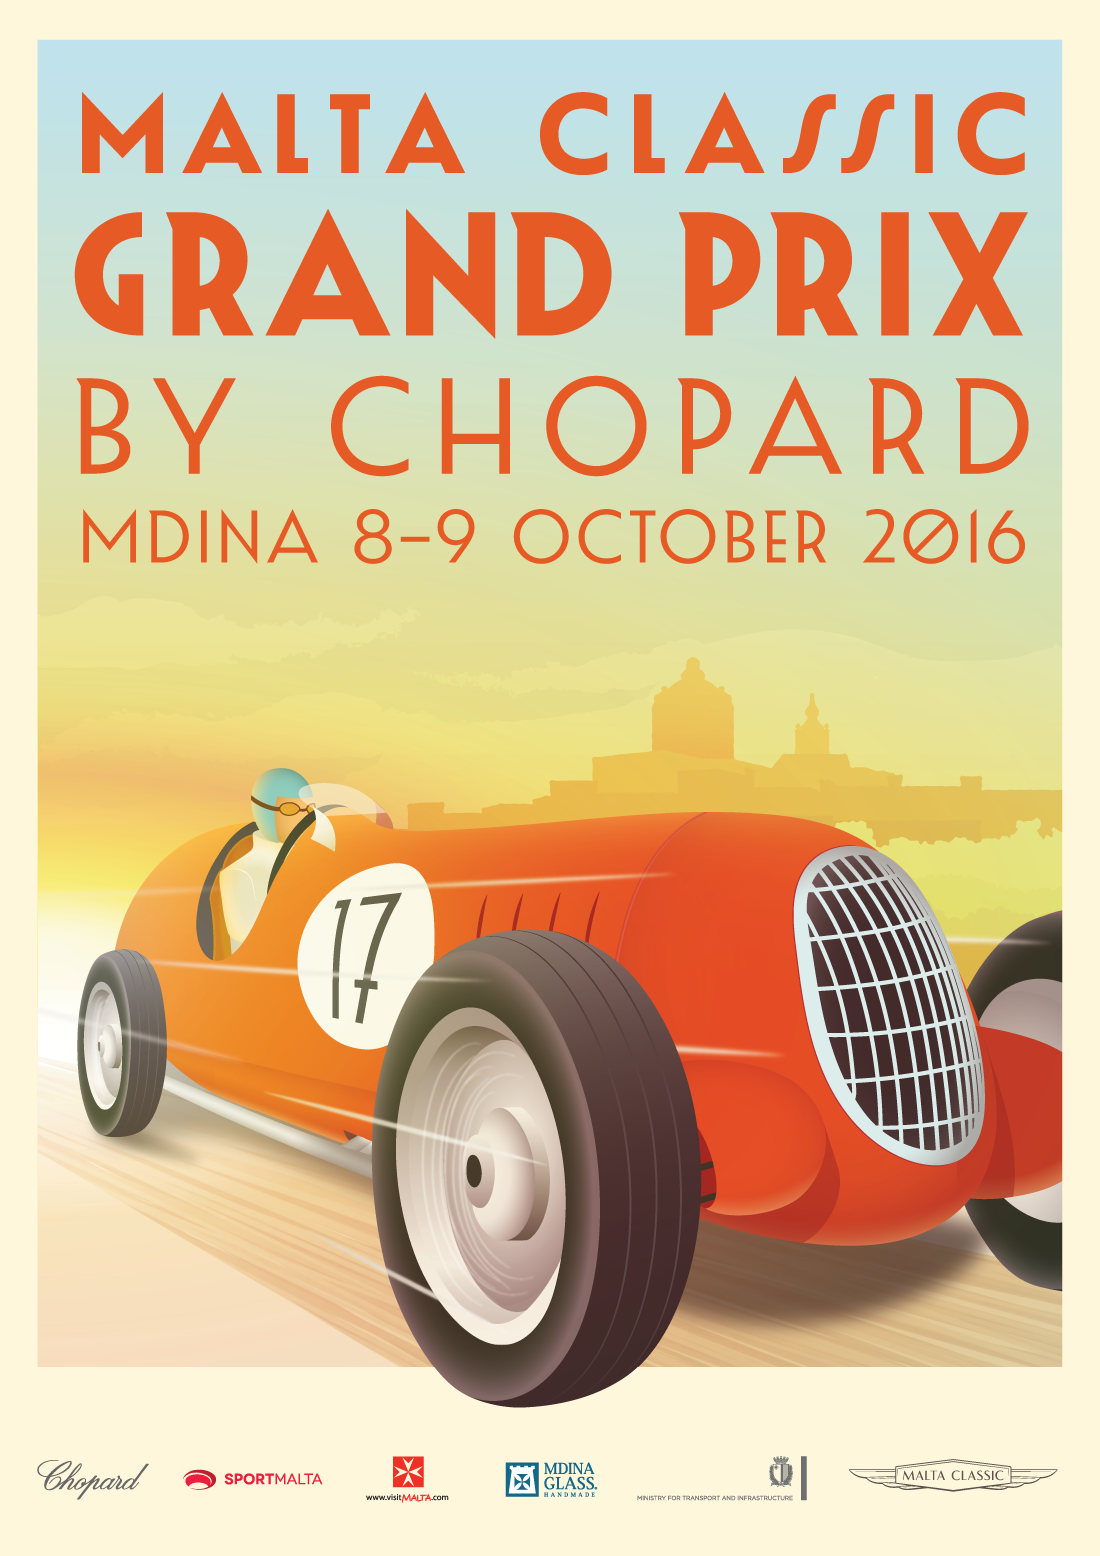 Malta Classic Grand Prix by Chopard poster